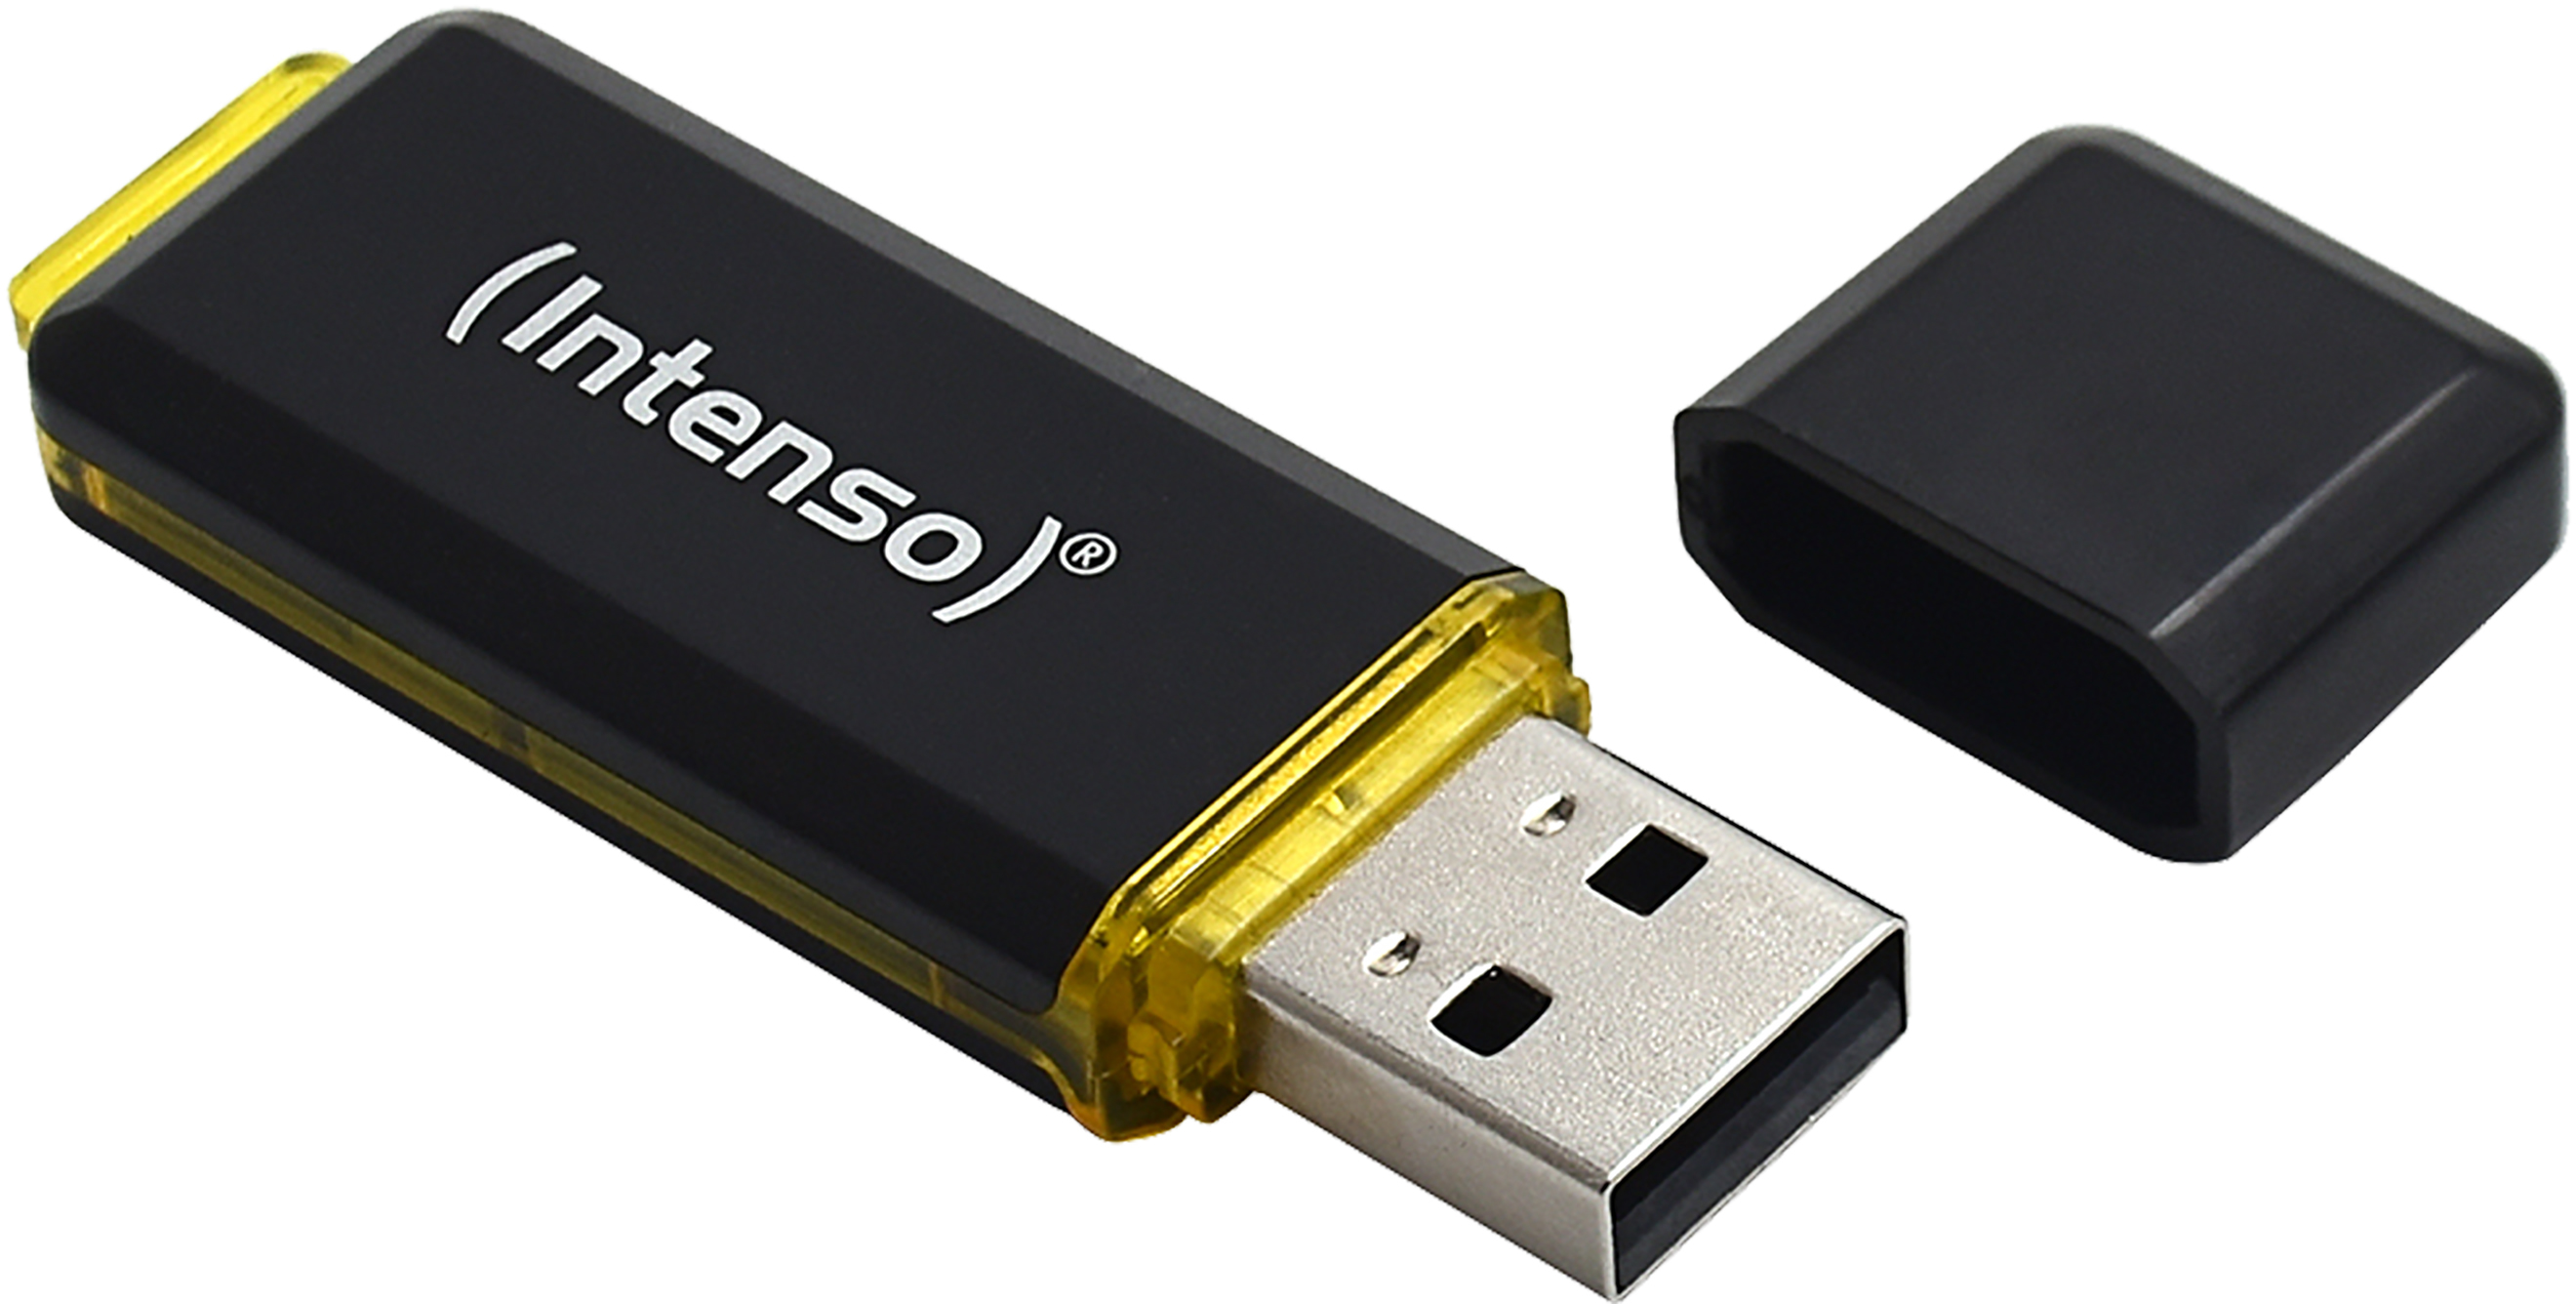 INTENSO 3.1 HIGH SPEED 250 USB-Stick, GB, Schwarz/Gelb 128 MB/s